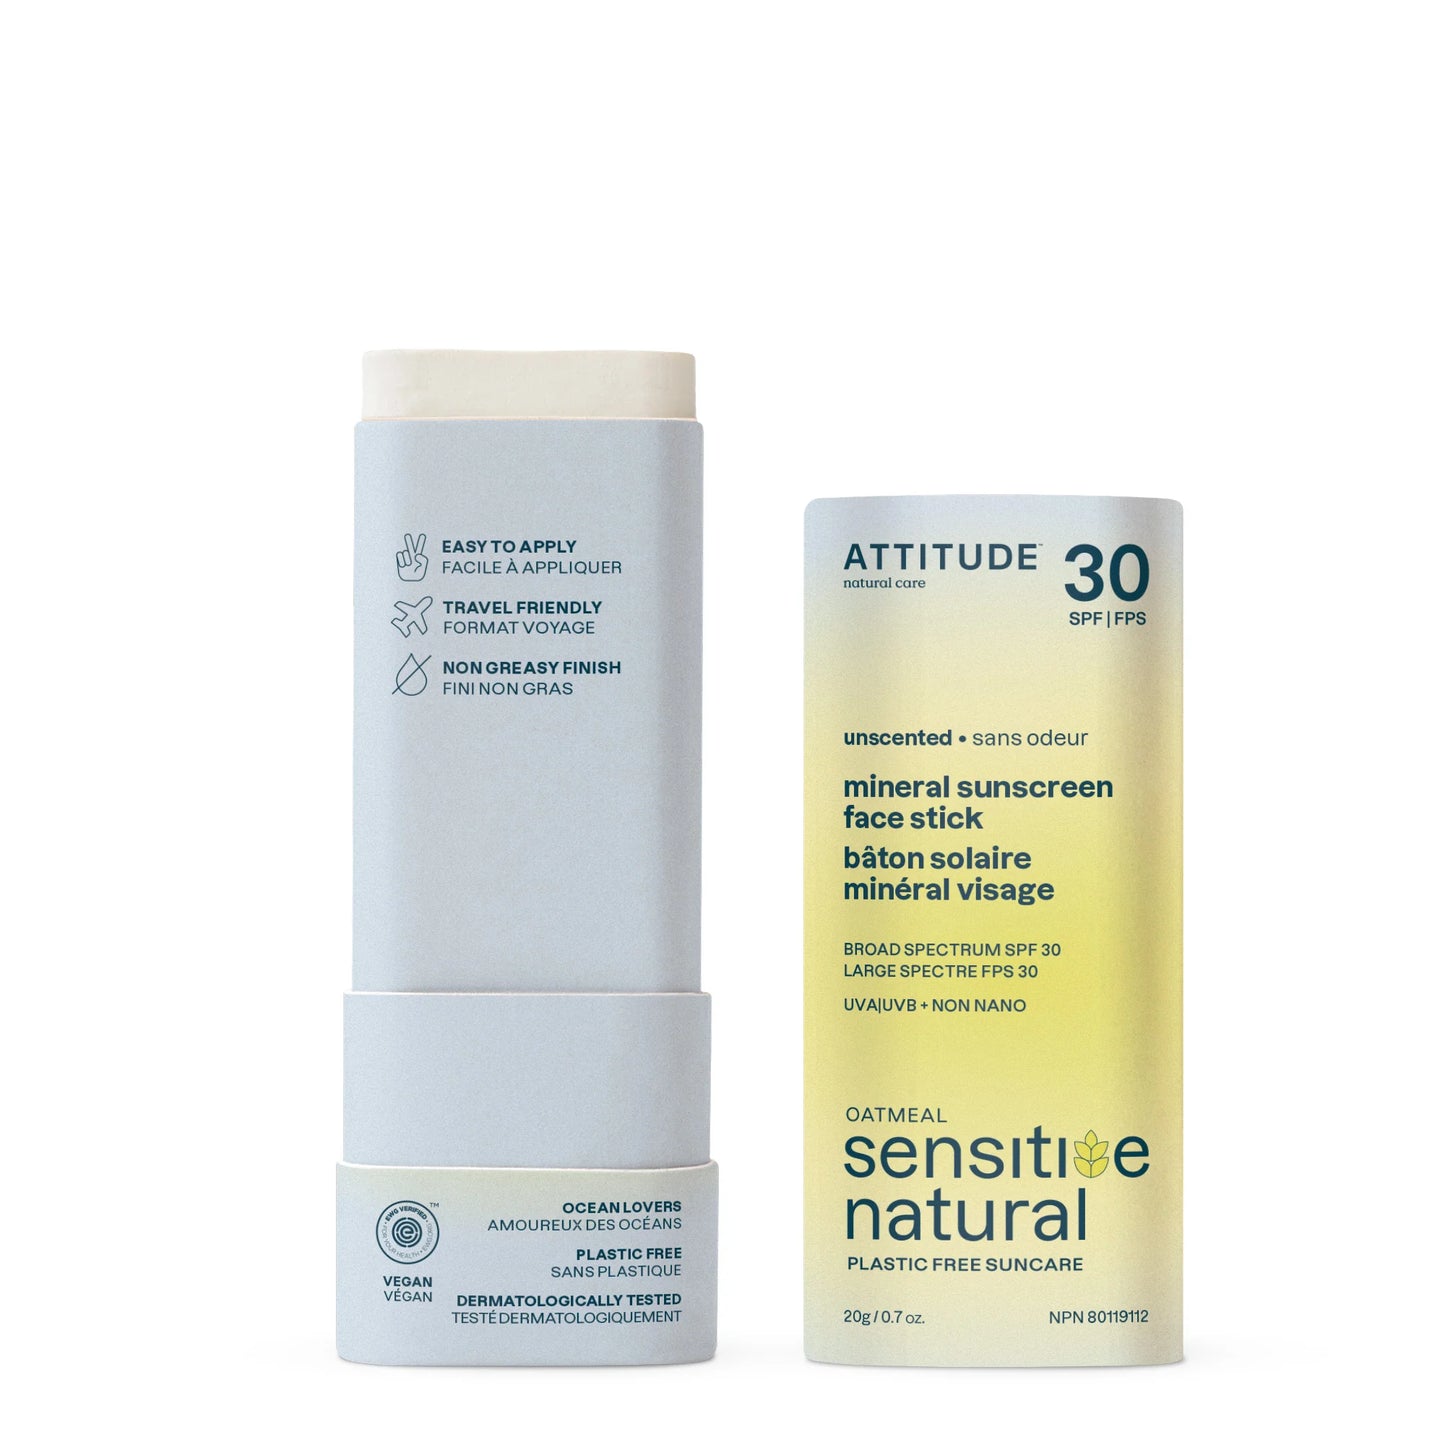 ATTITUDE SUNLY Oatmeal Sensitive Natural – Sunscreen face stick – SPF 30 – Unscented 20g